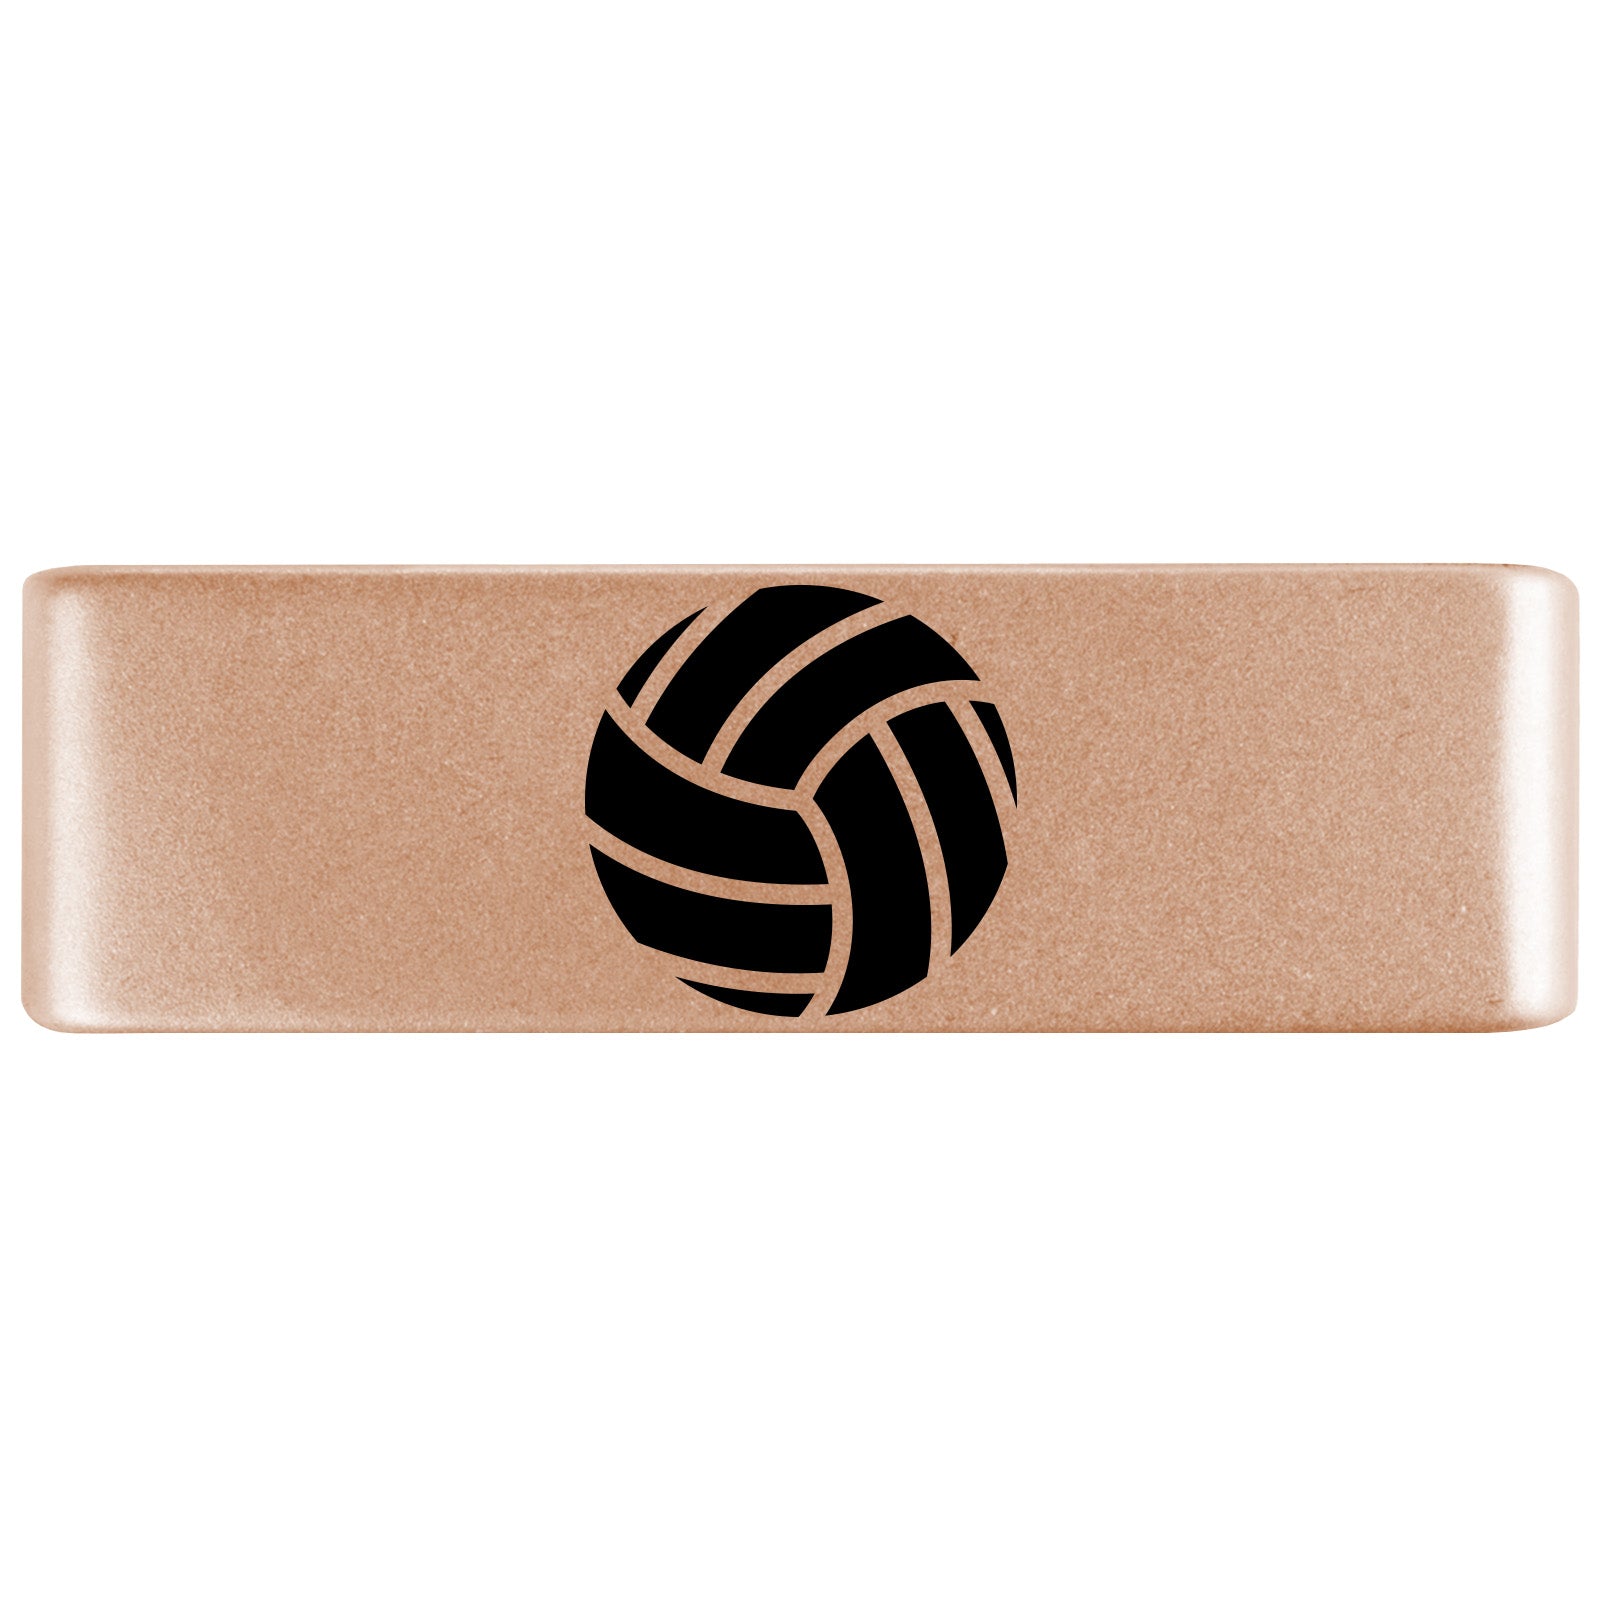 Volleyball Badge Badge 19mm - ROAD iD